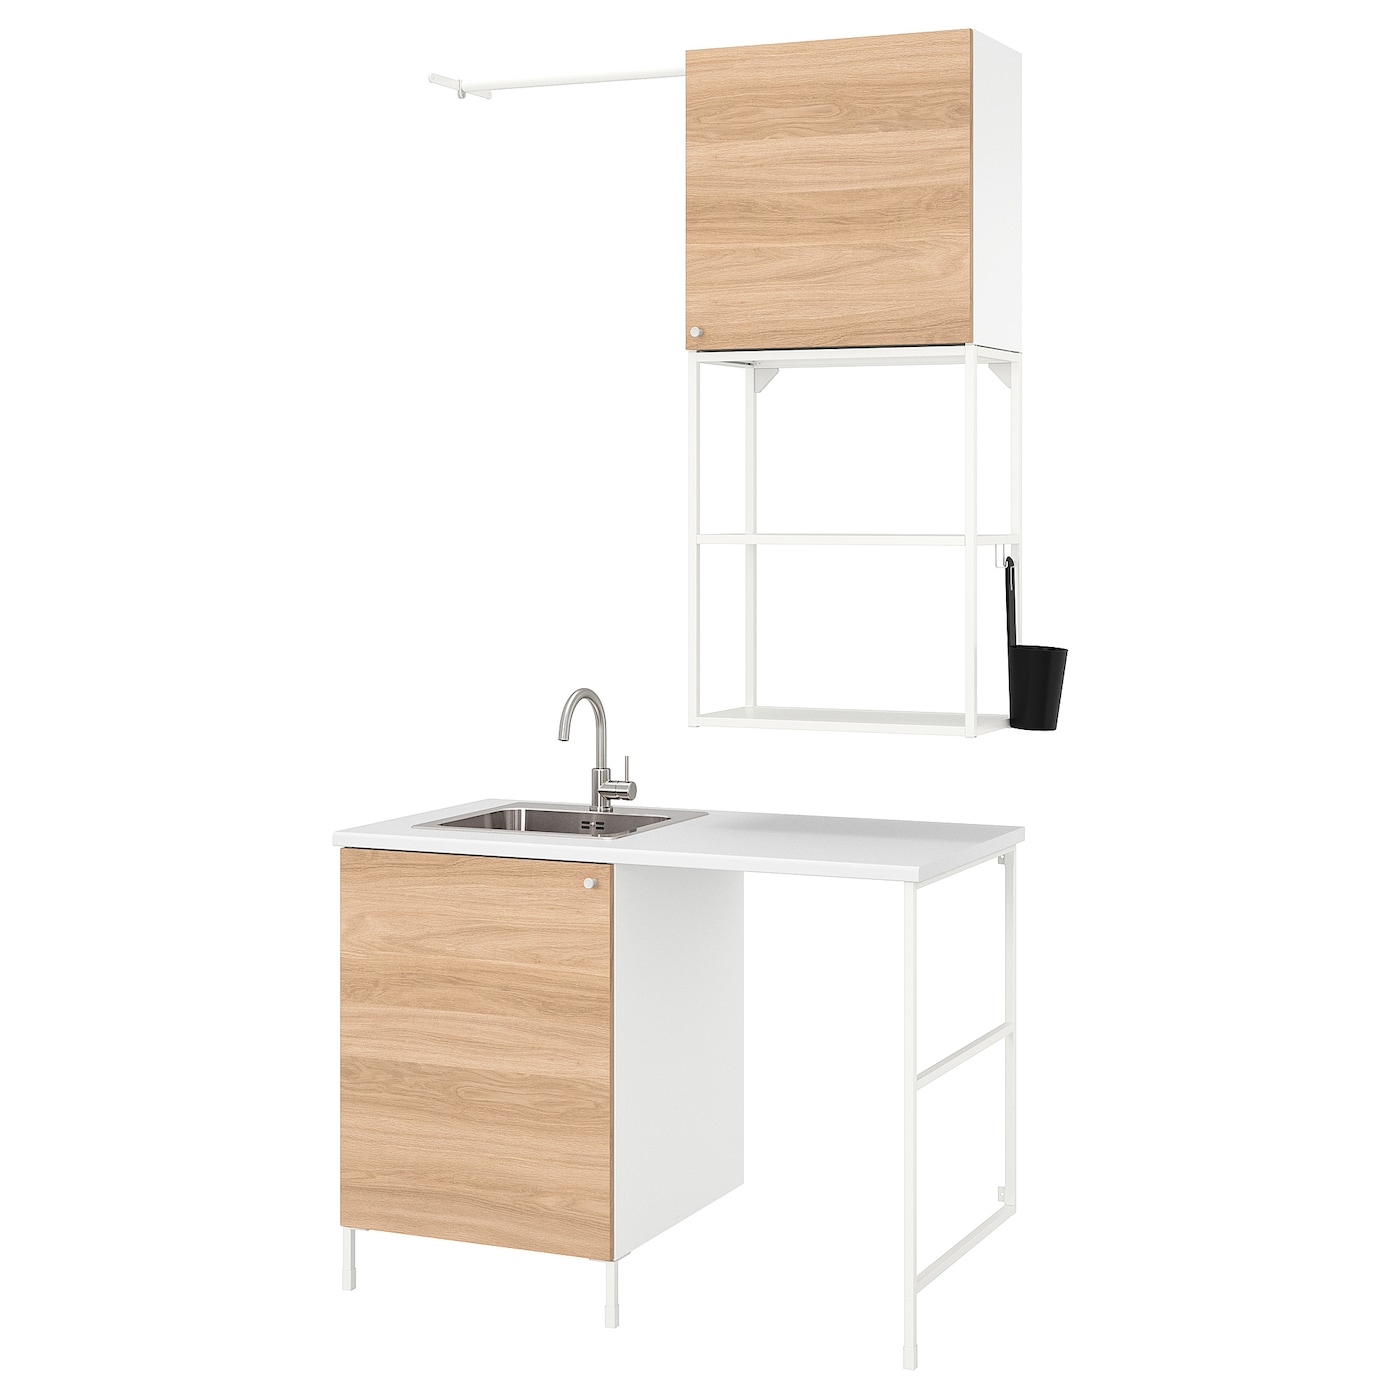 Комбинация для ванной - IKEA ENHET, 139х63.5х87.5 см, белый/имитация дуба, ЭНХЕТ ИКЕА